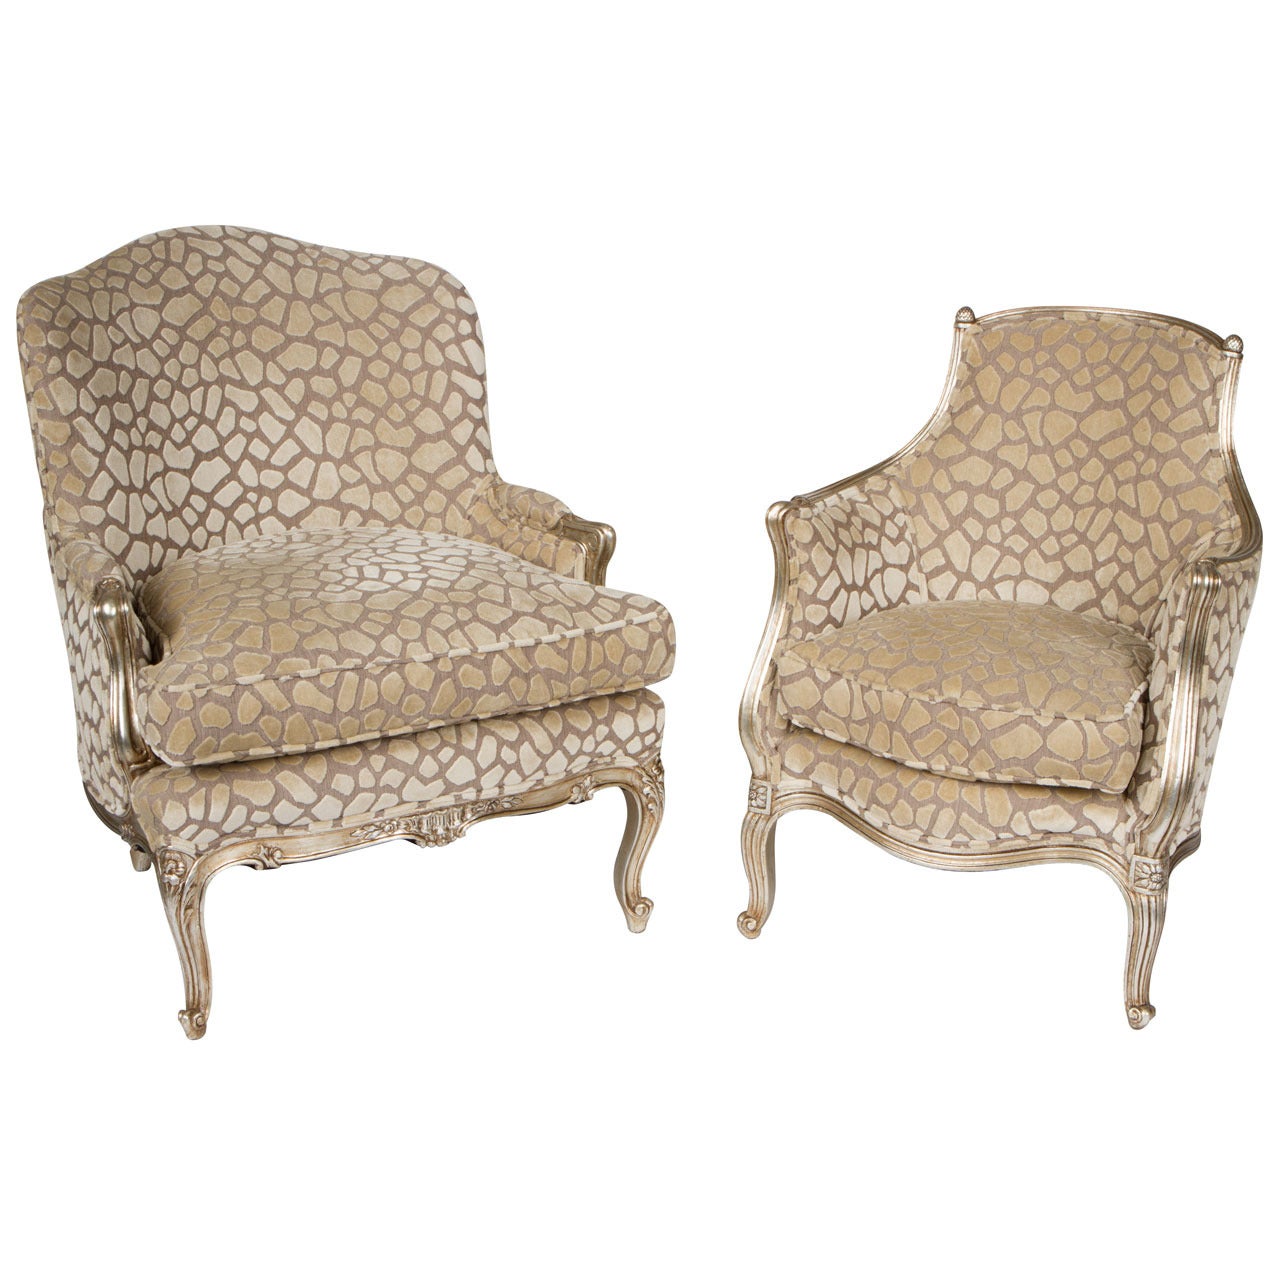 Pair of Maison Jansen Attributable Chairs